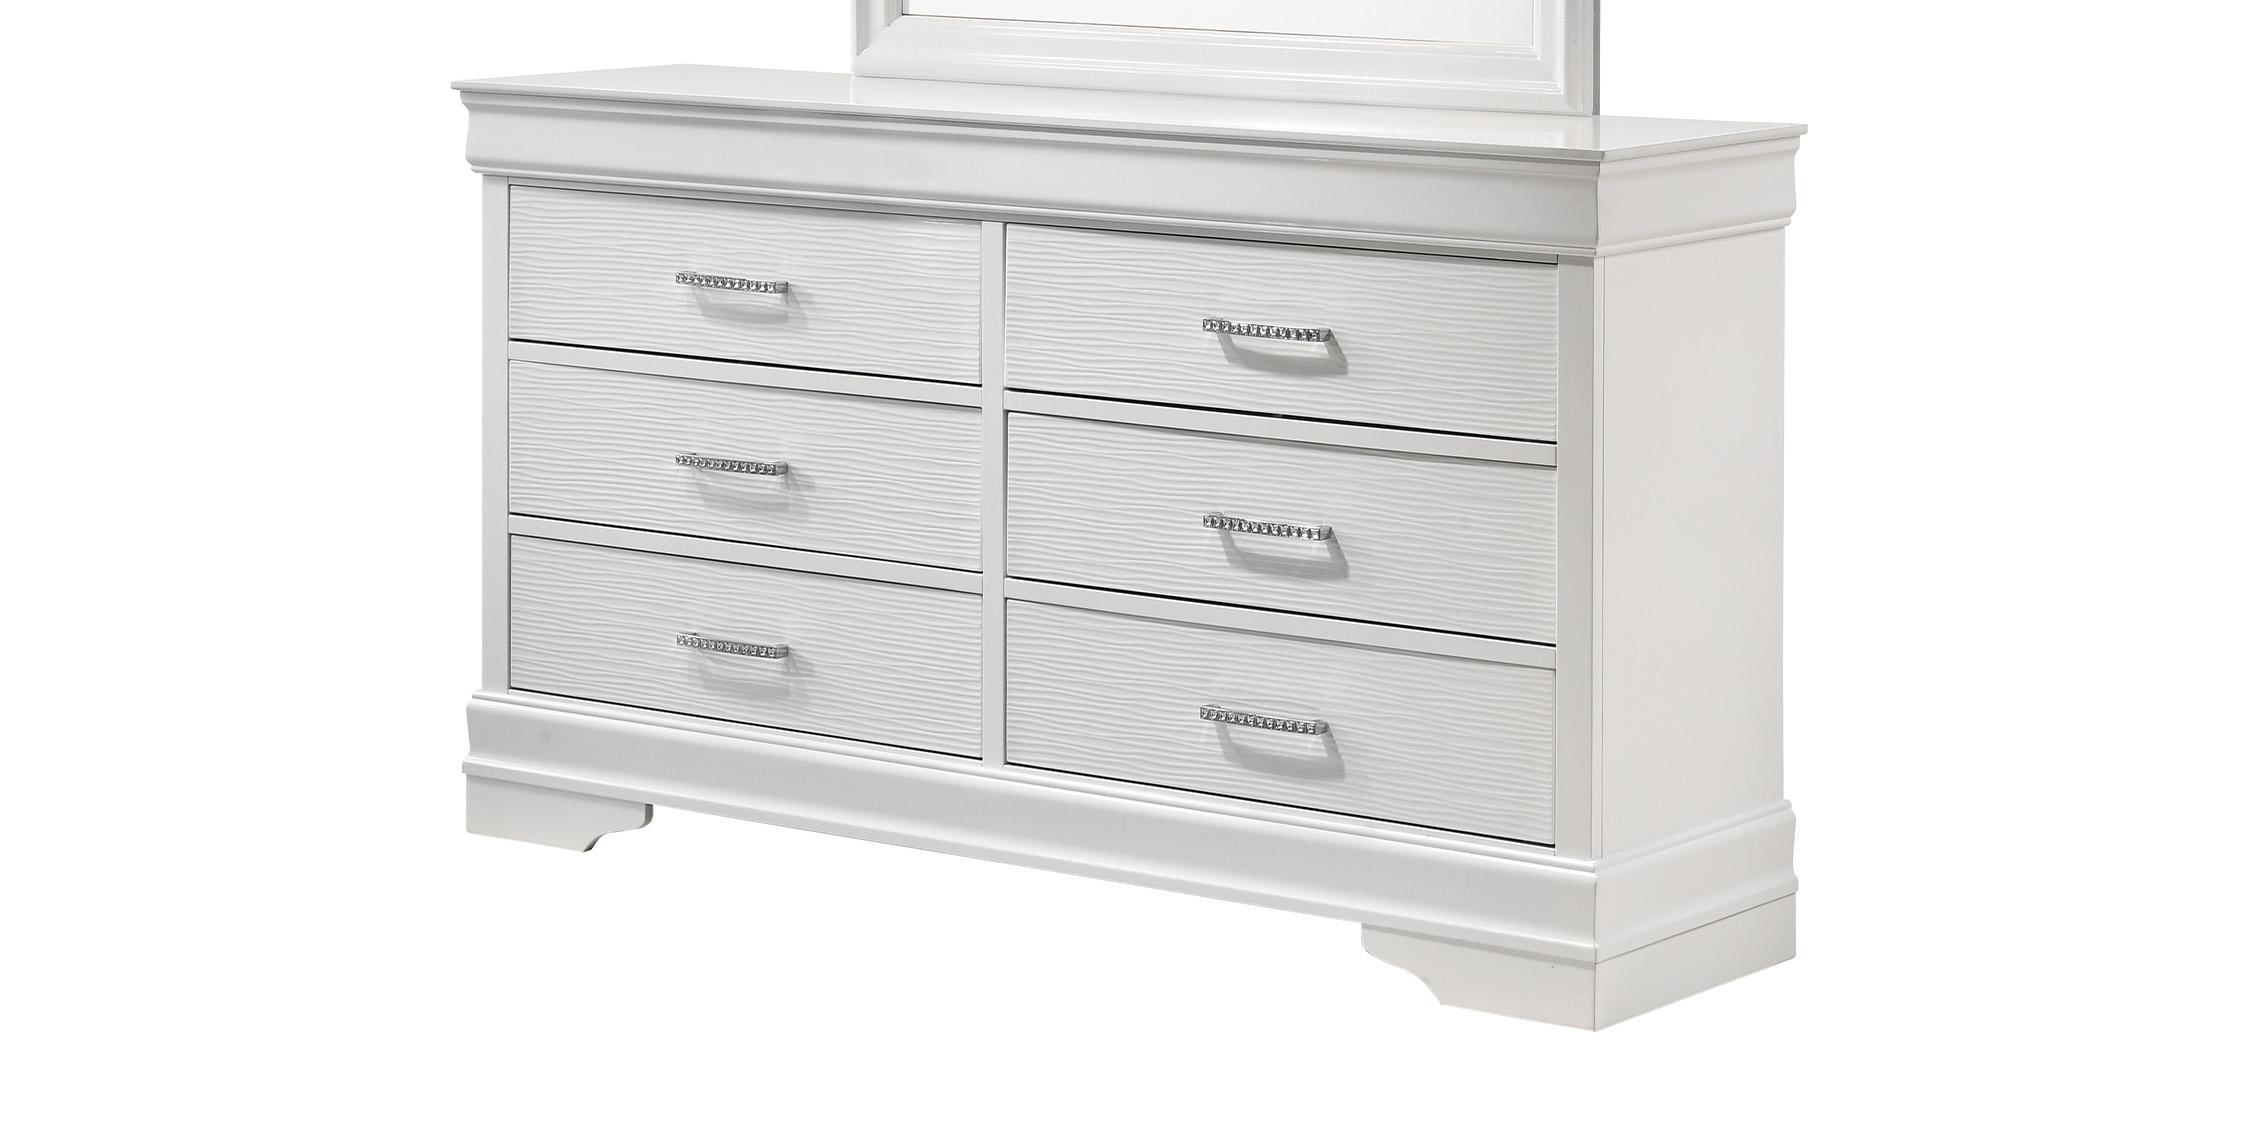 Contemporary, Modern Dresser BROOKLYN QB13317619 in White 